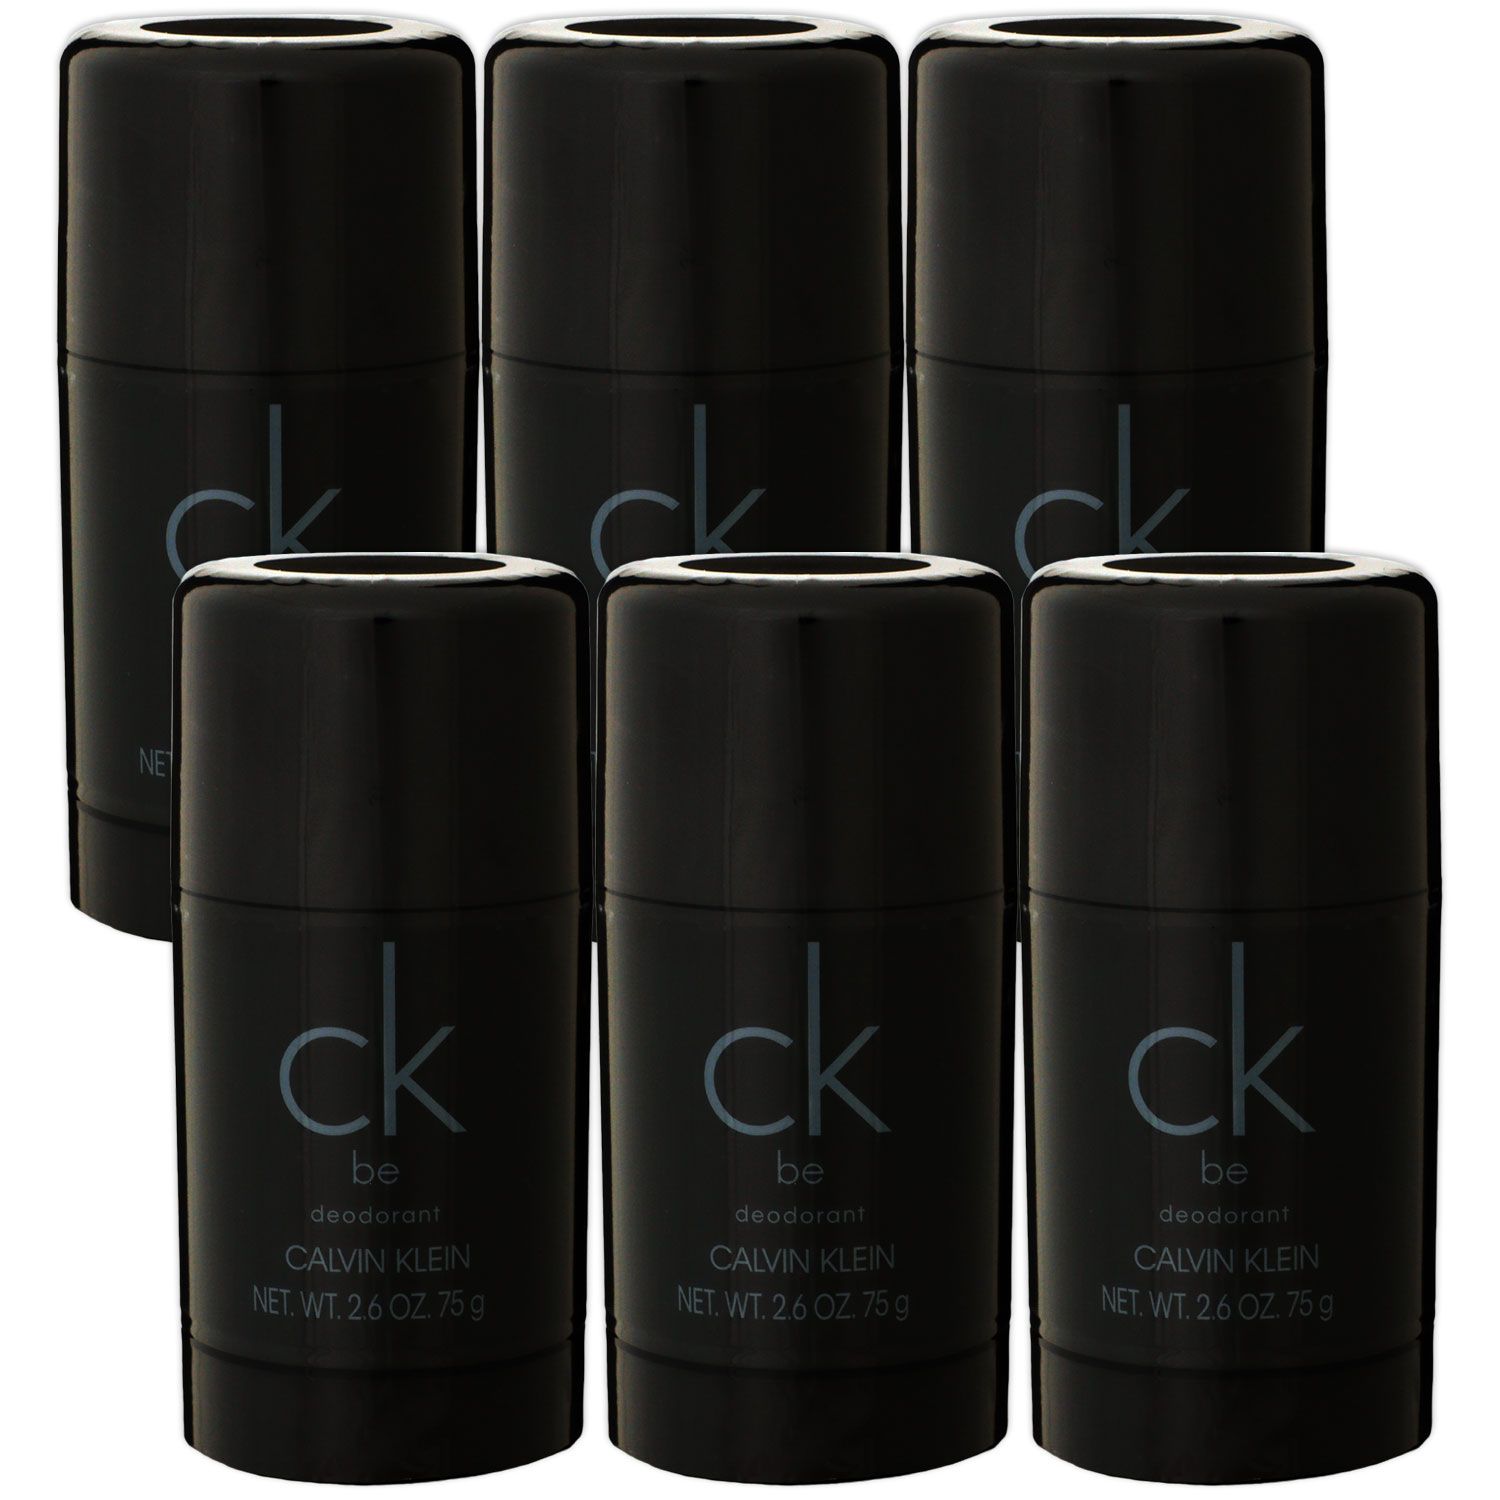 https://pic.riemax.de/Calvin-Klein-CK-Be-6-x-75-ml-Deostick-Deo-Stick-Deodorant-Stick-Deodorant-Set.25483a.jpg